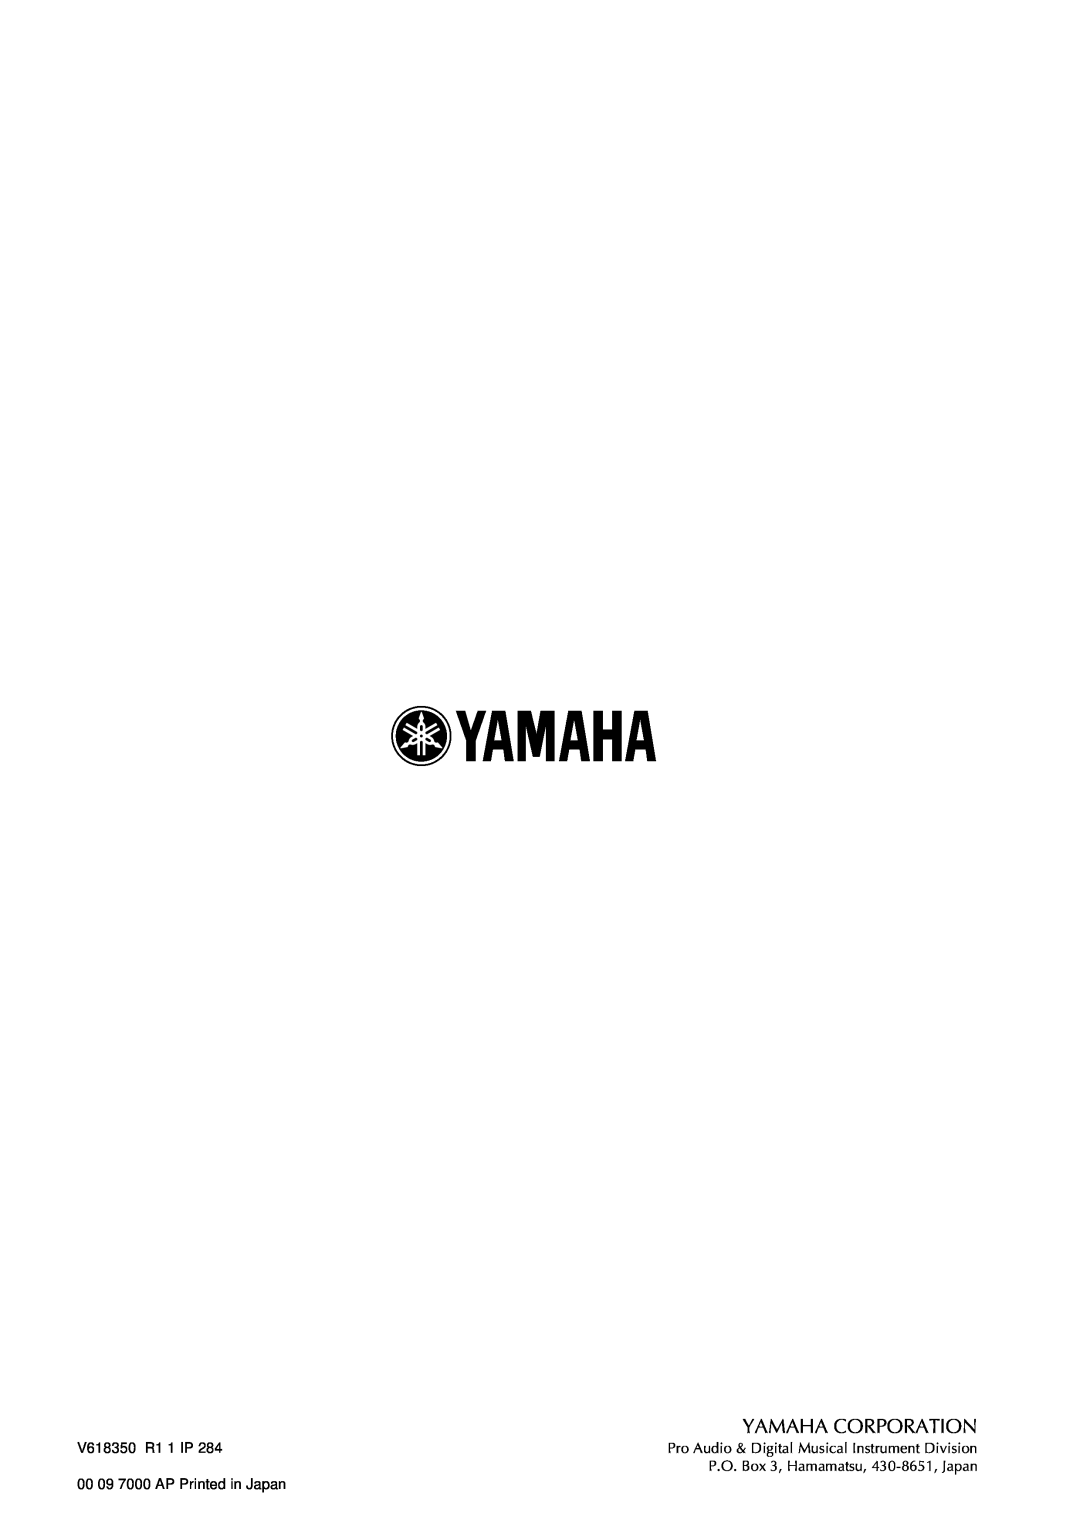 Yamaha AW4416 manual Yamaha Corporation, V618350 R1 1 IP, Pro Audio & Digital Musical Instrument Division 